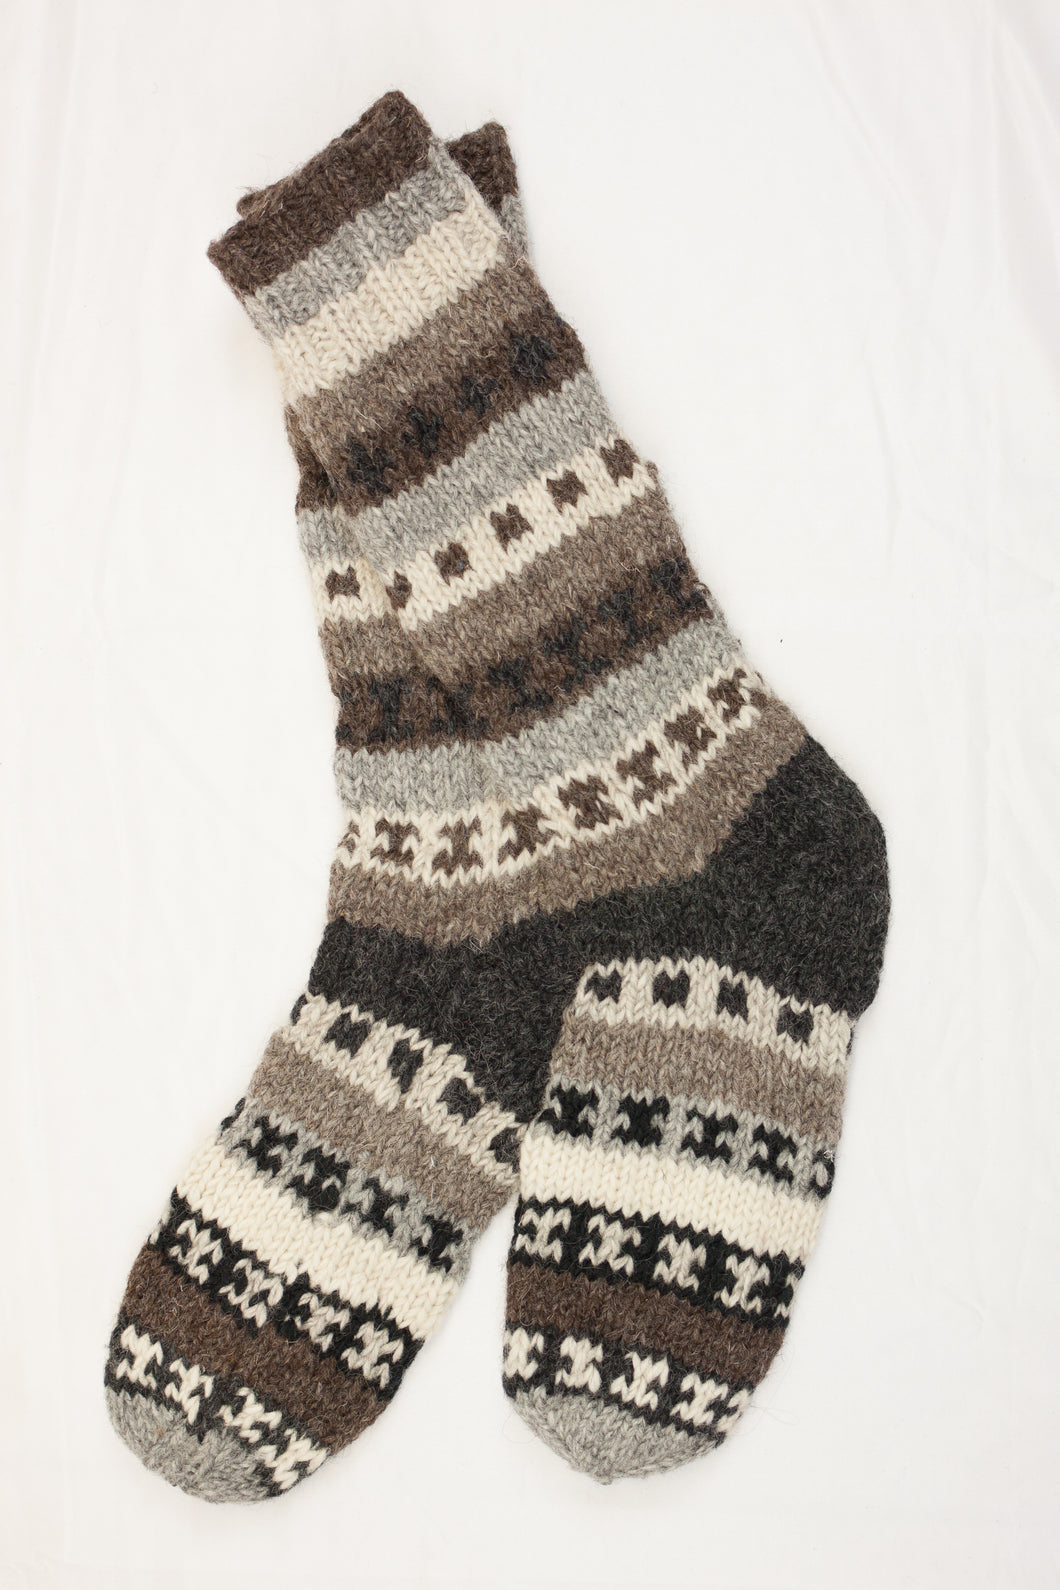 Hand knitted calf high woolen socks with inner fleece liner